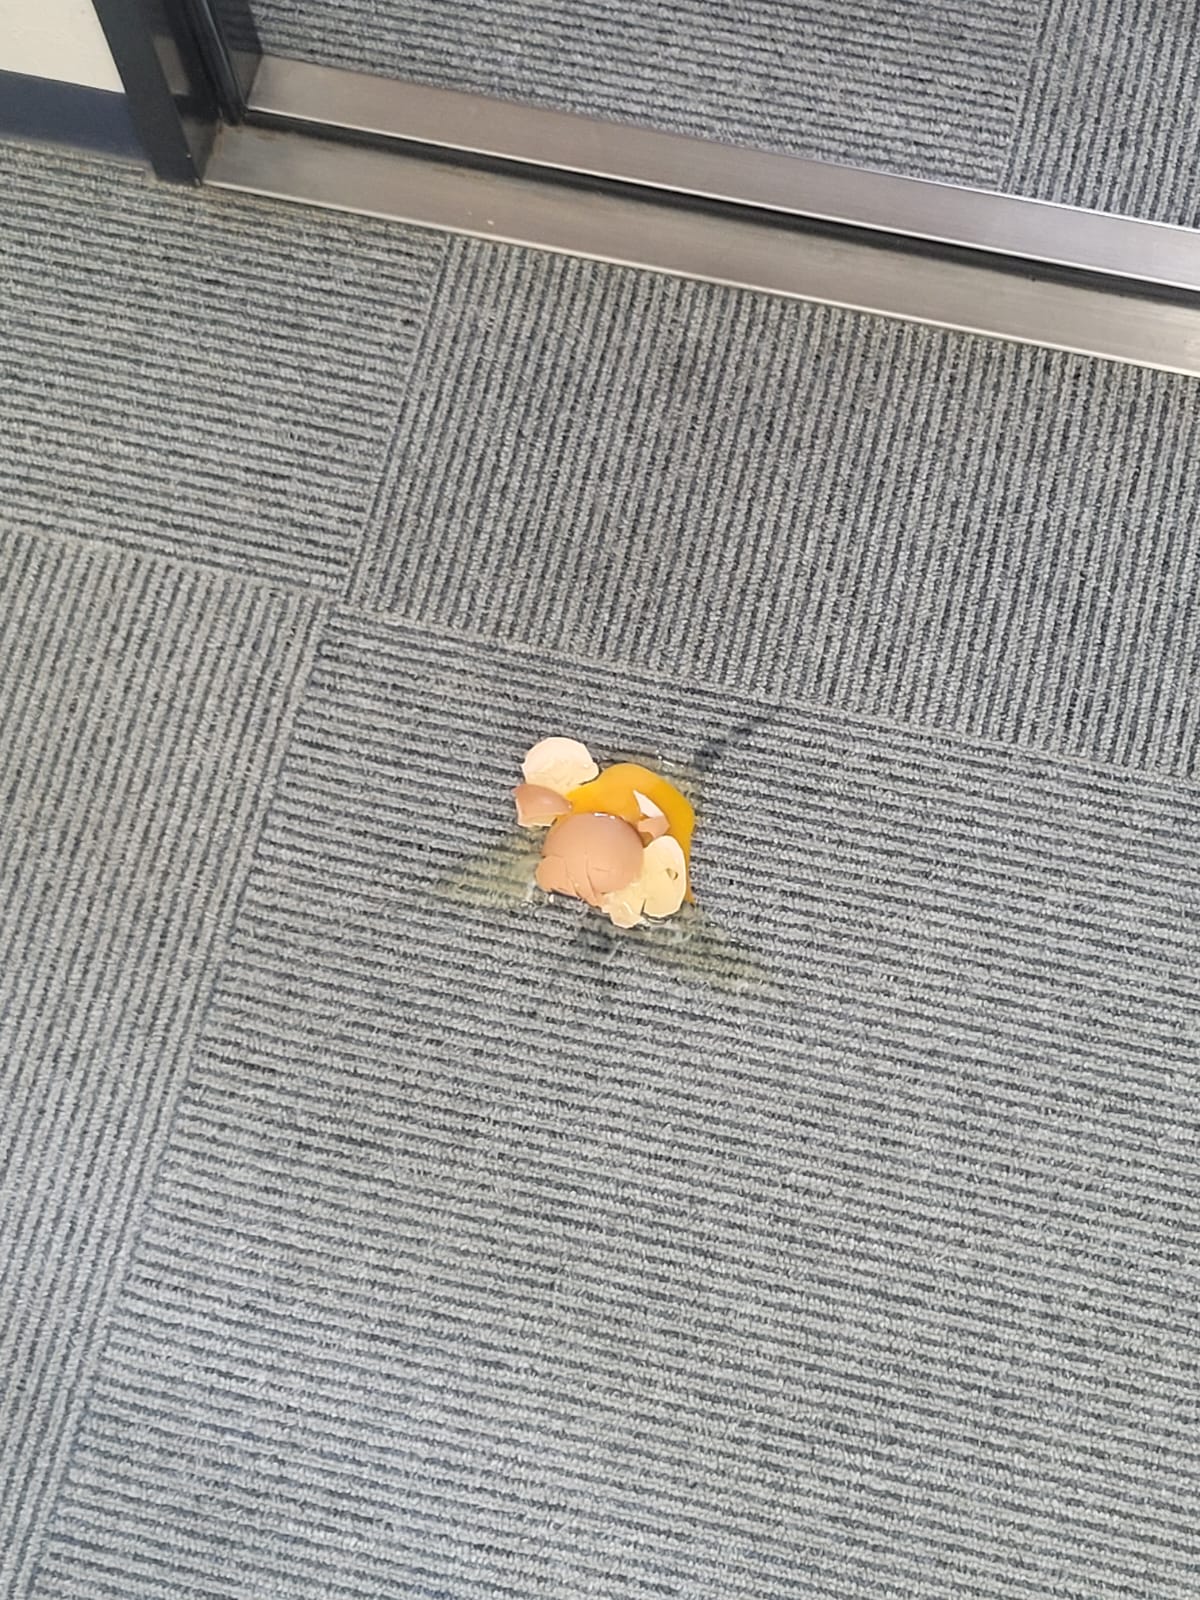 The egg on the carpet